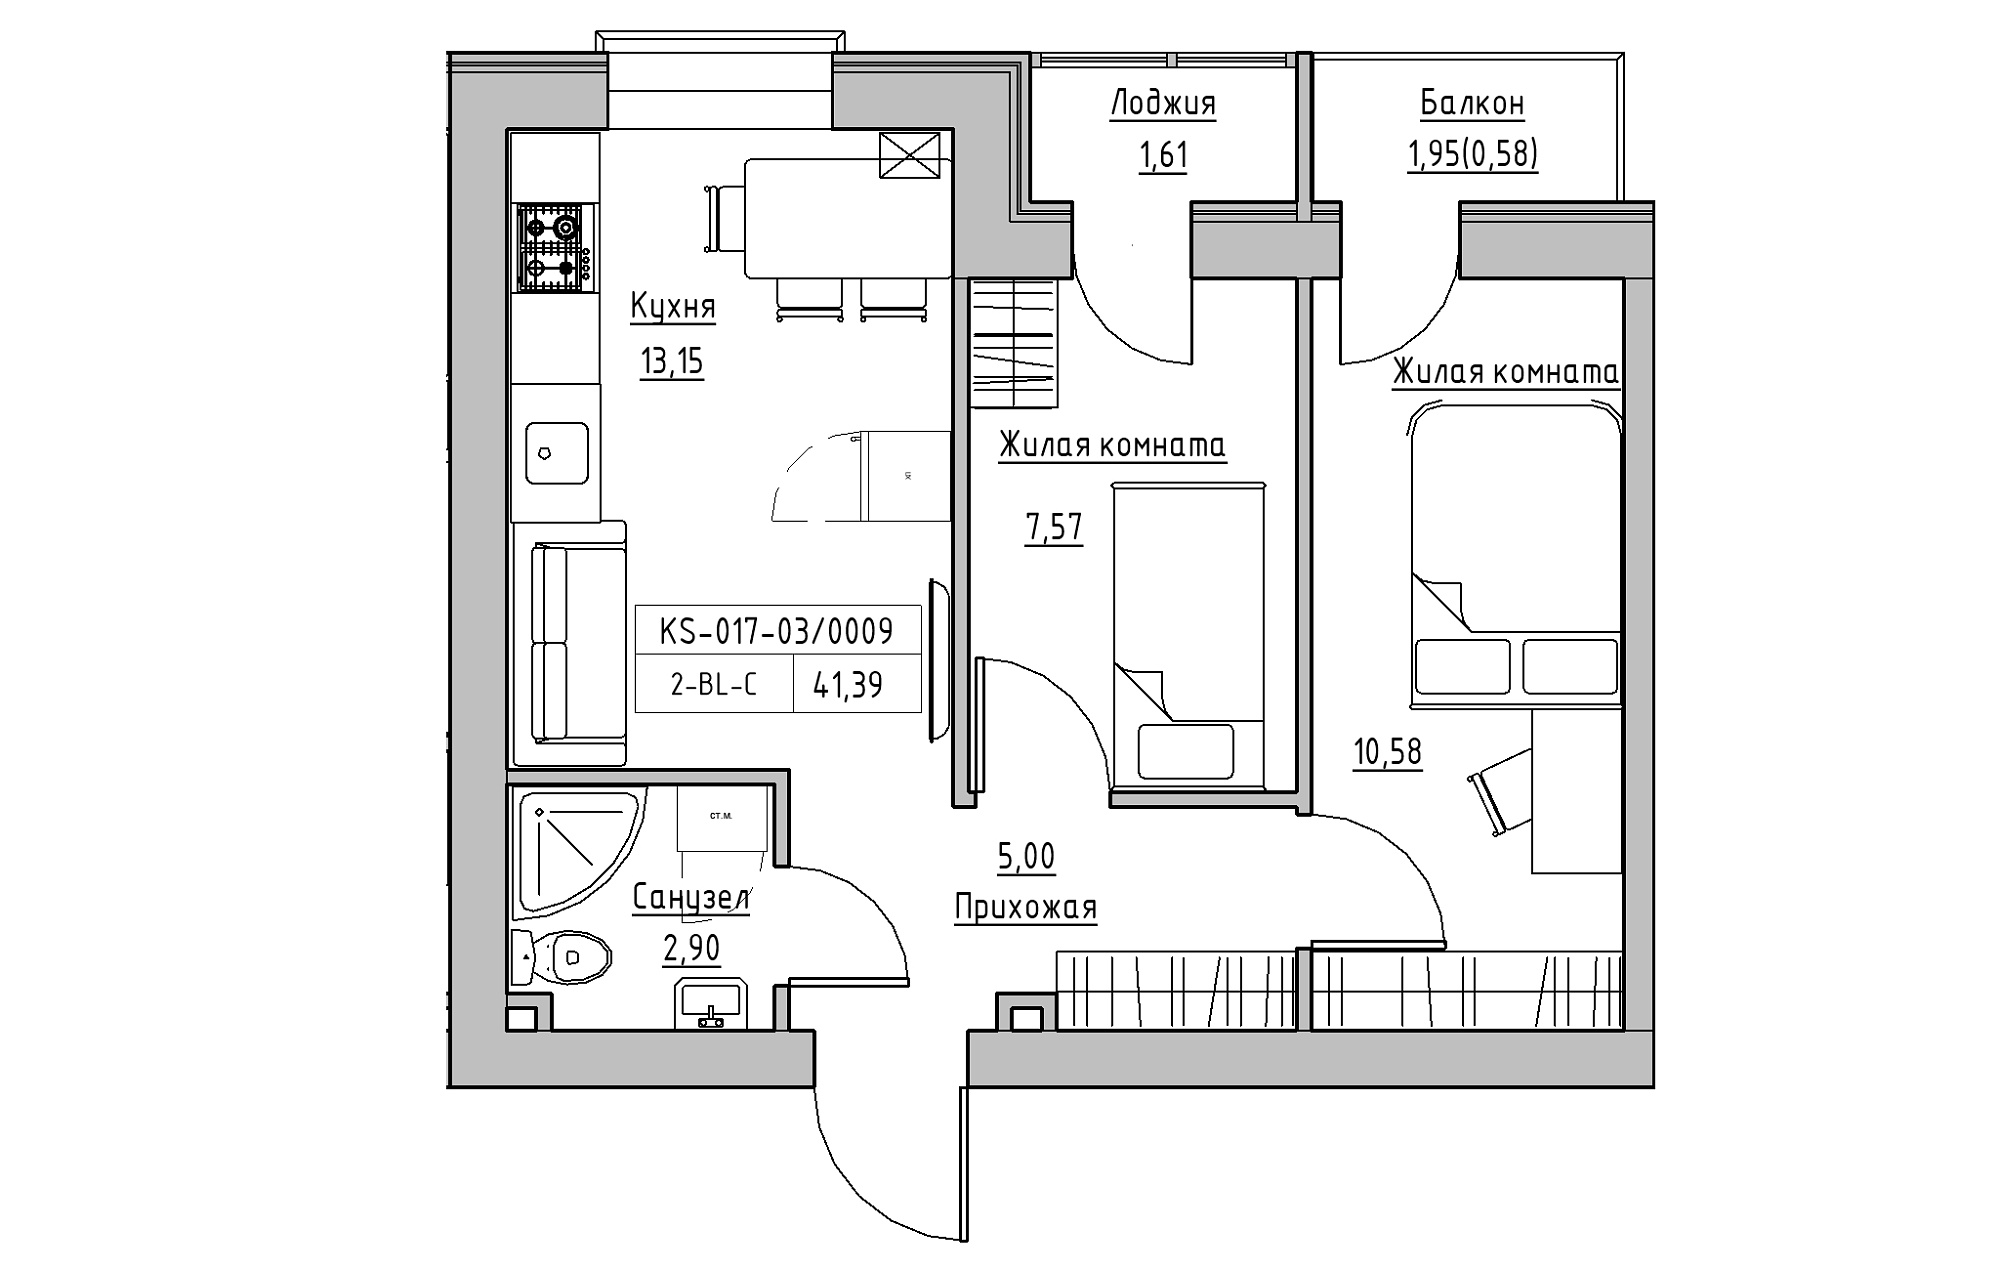 Planning 2-rm flats area 41.39m2, KS-017-03/0009.